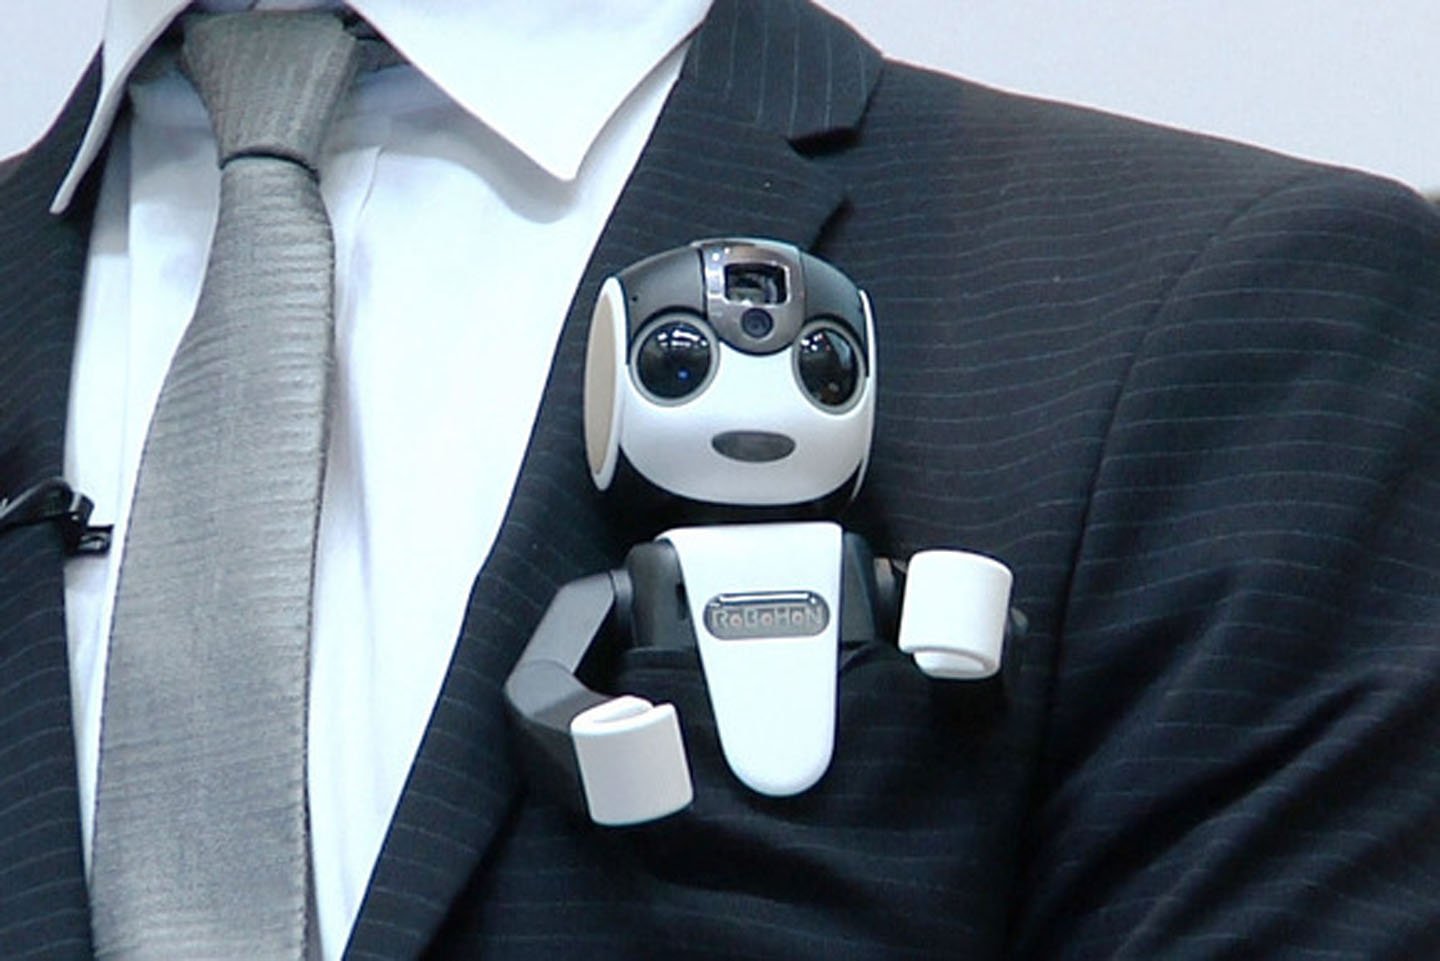 RoBoHoN Siap Dijual Bulan Depan, Robot Smartphone yang Lucu & Canggih